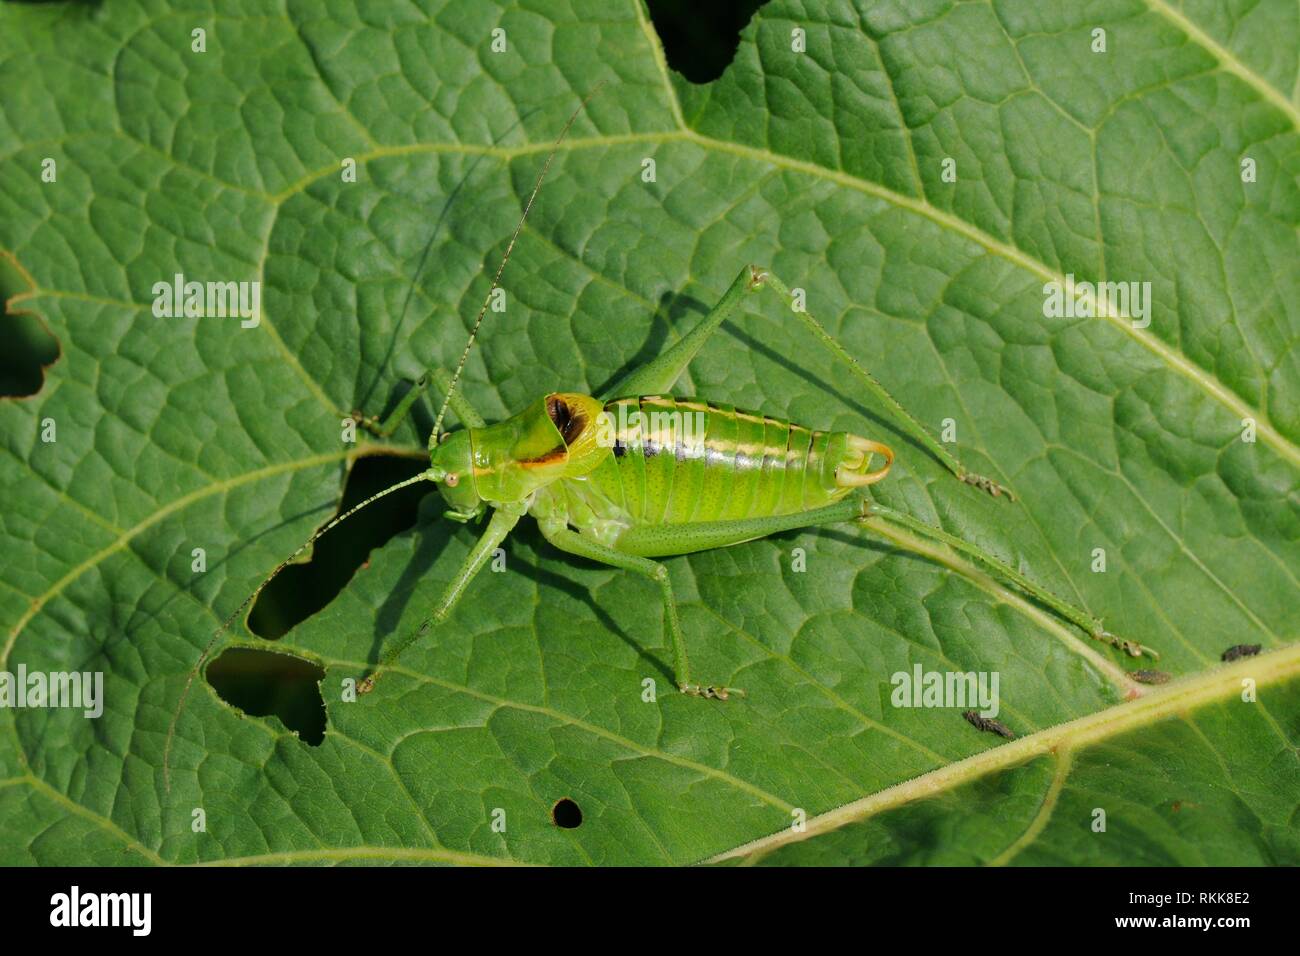 Male Ornate bush cricket (Poecilimon ornatus) standing on Dock leaf, Julian Alps, Slovenia, July. Stock Photo